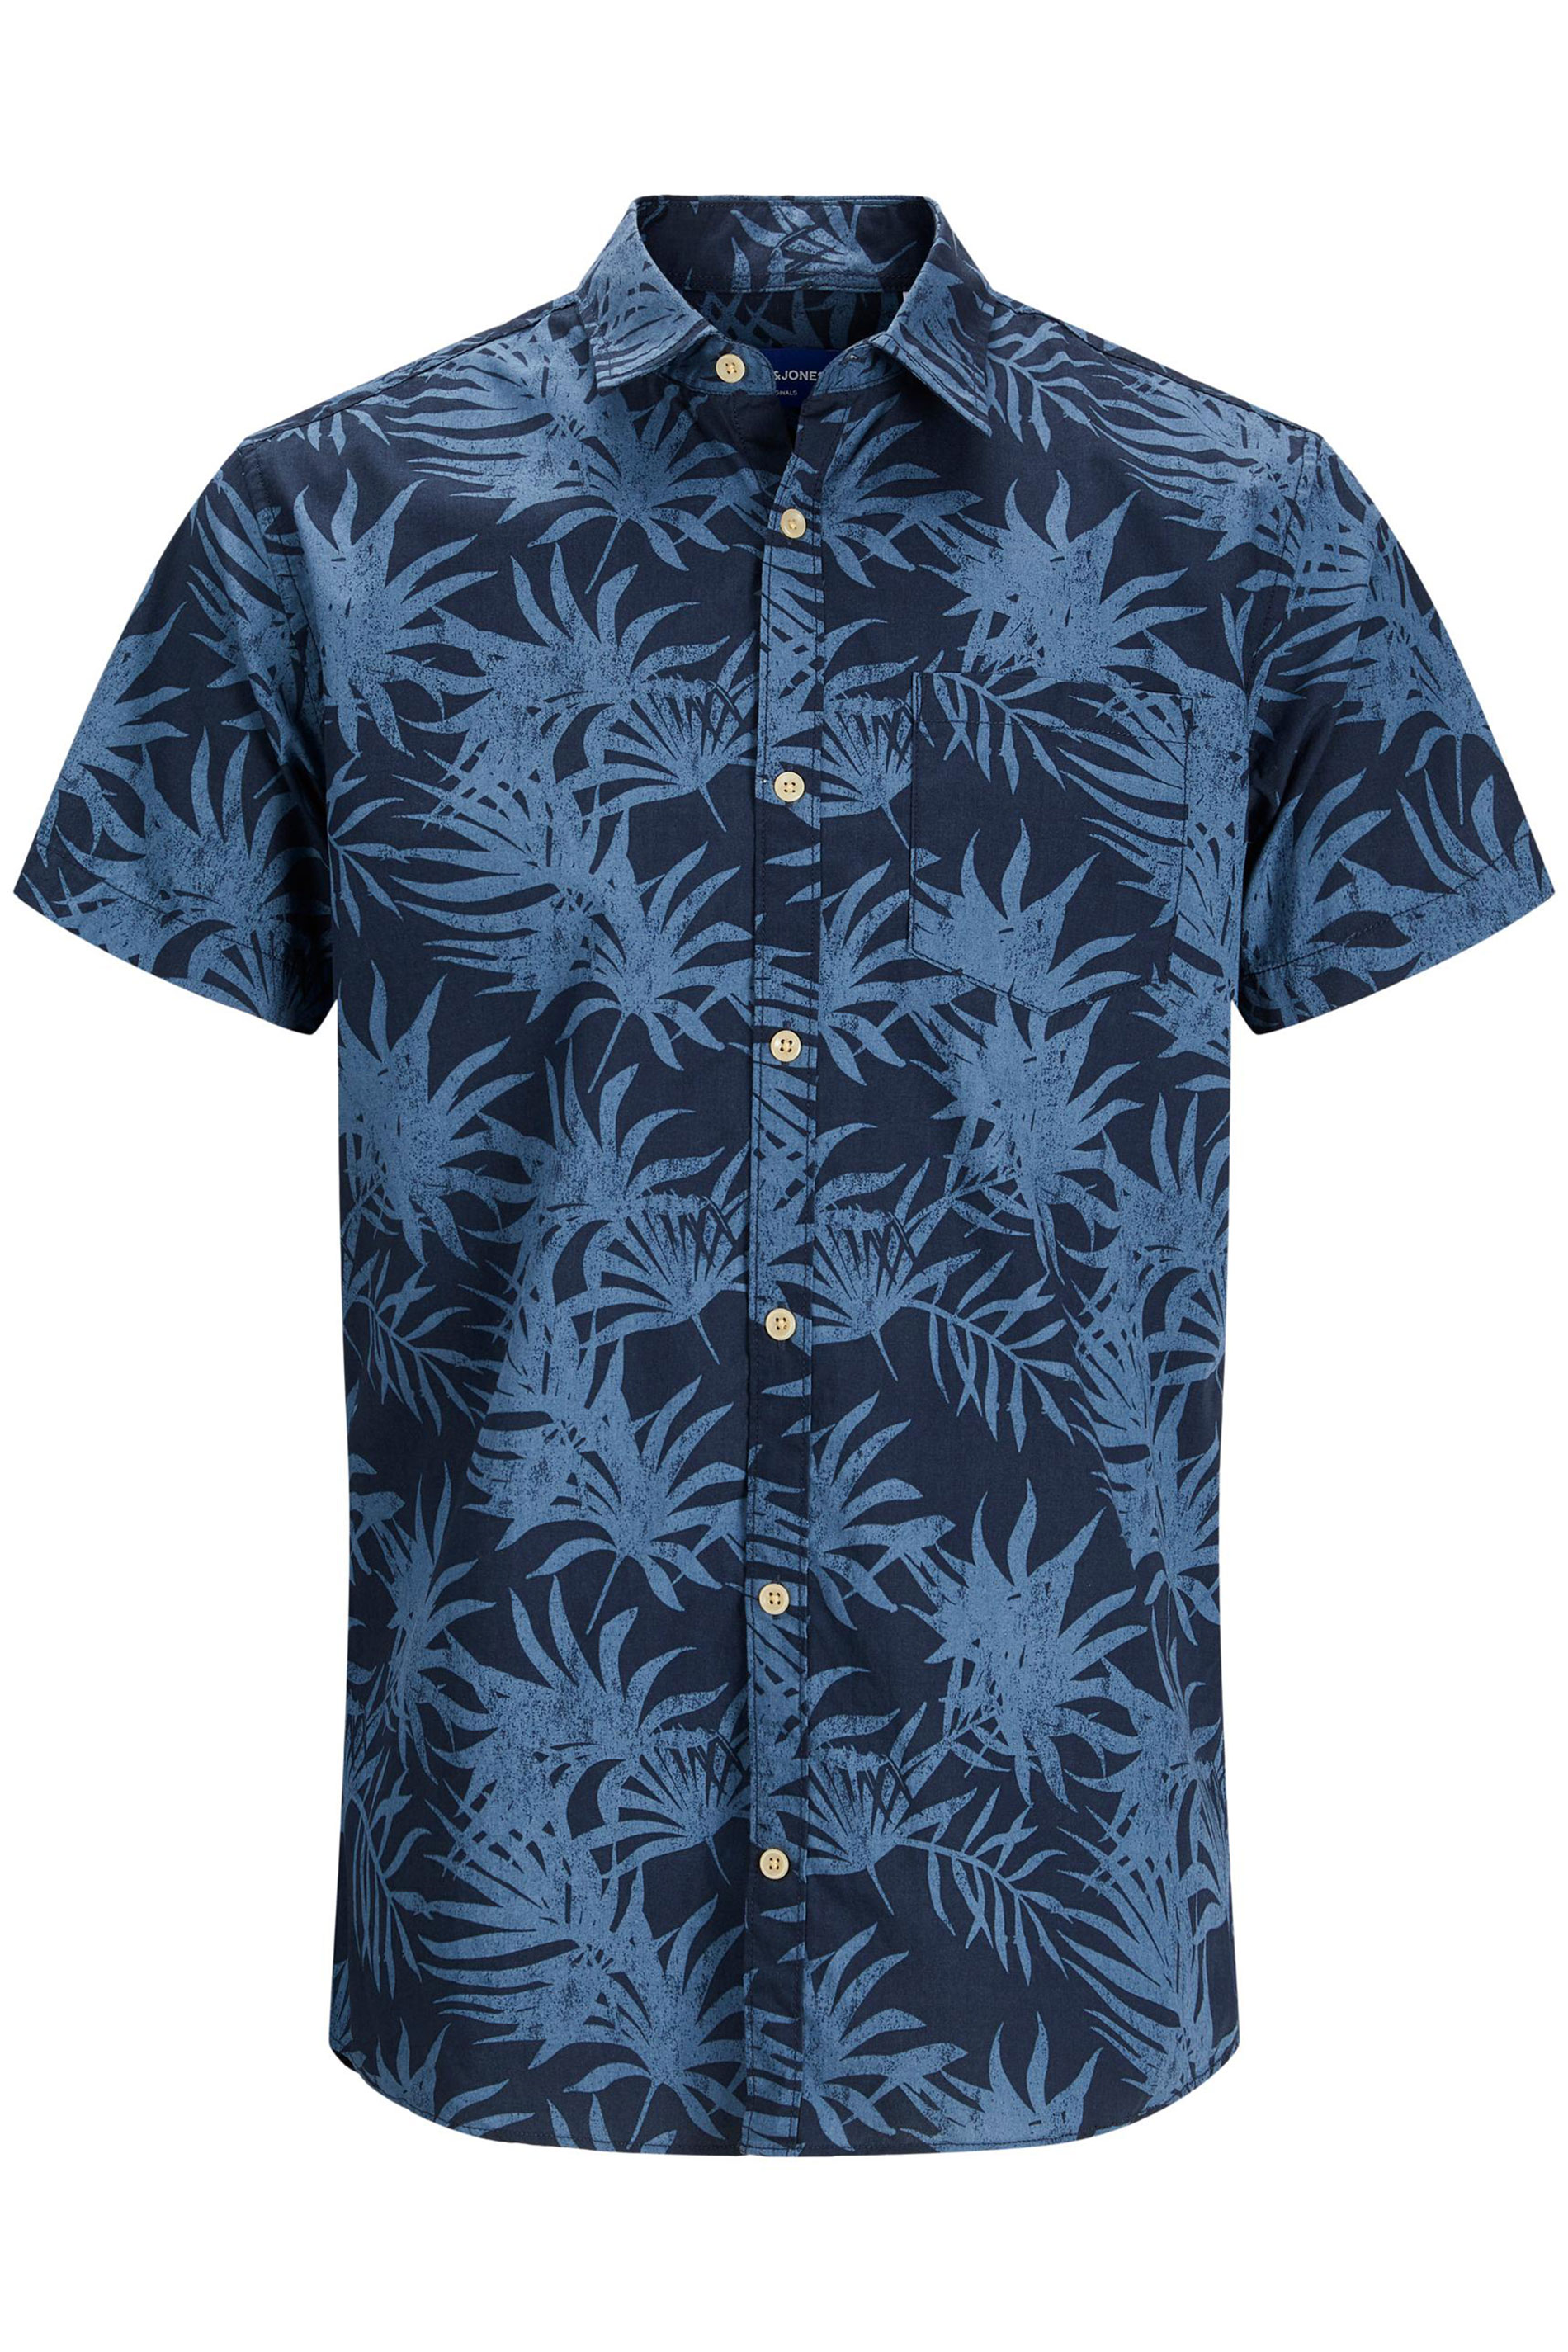 JACK & JONES Big & Tall Navy Blue Leaf Print Bloomer Shirt_F.jpg